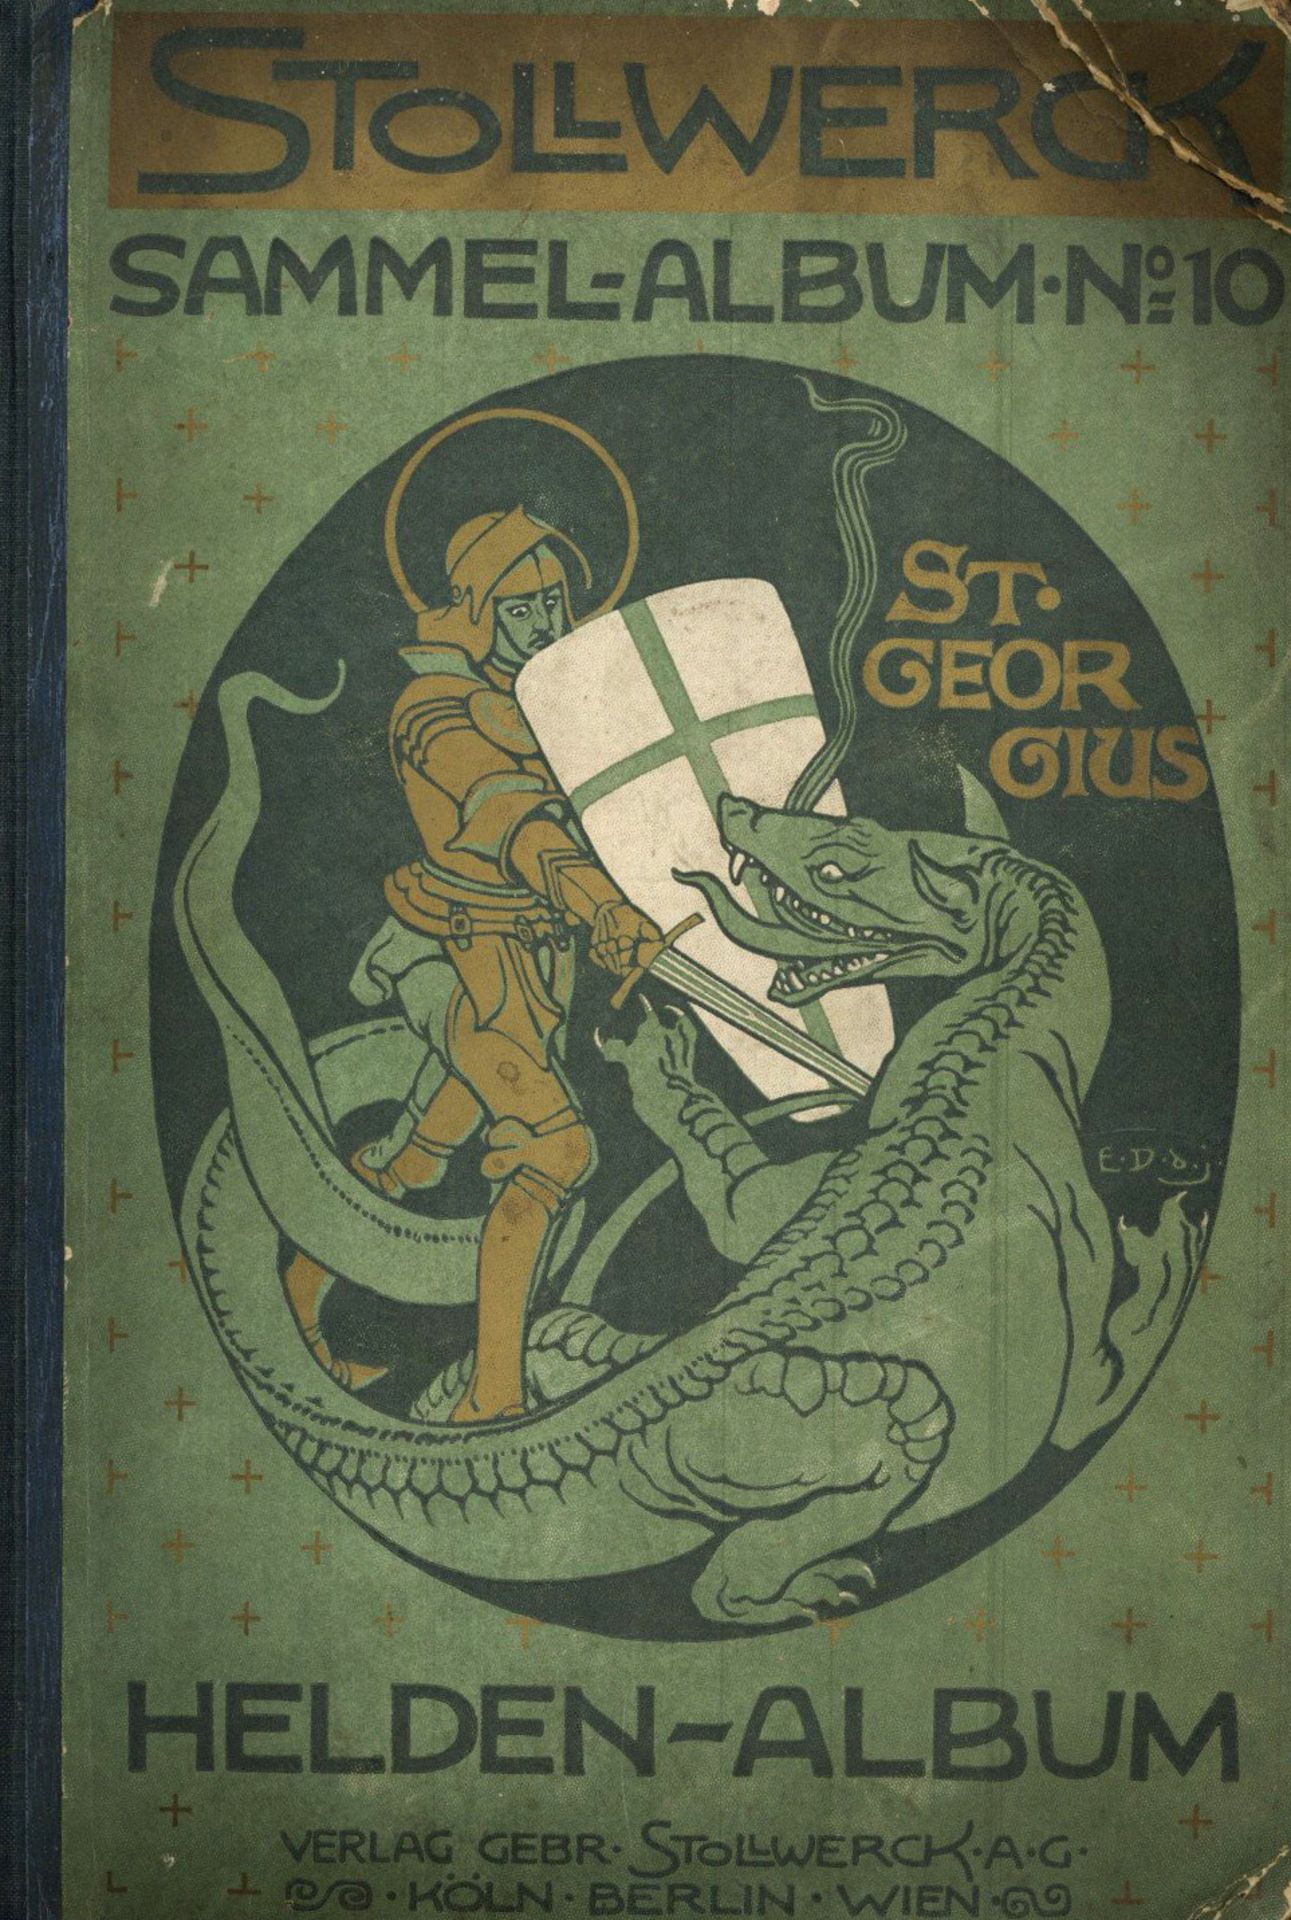 Sammelbild-Album Helden-Album St. Georgius Nr. 10, Verlag Stollwerck Köln 1909, komplett mit 288